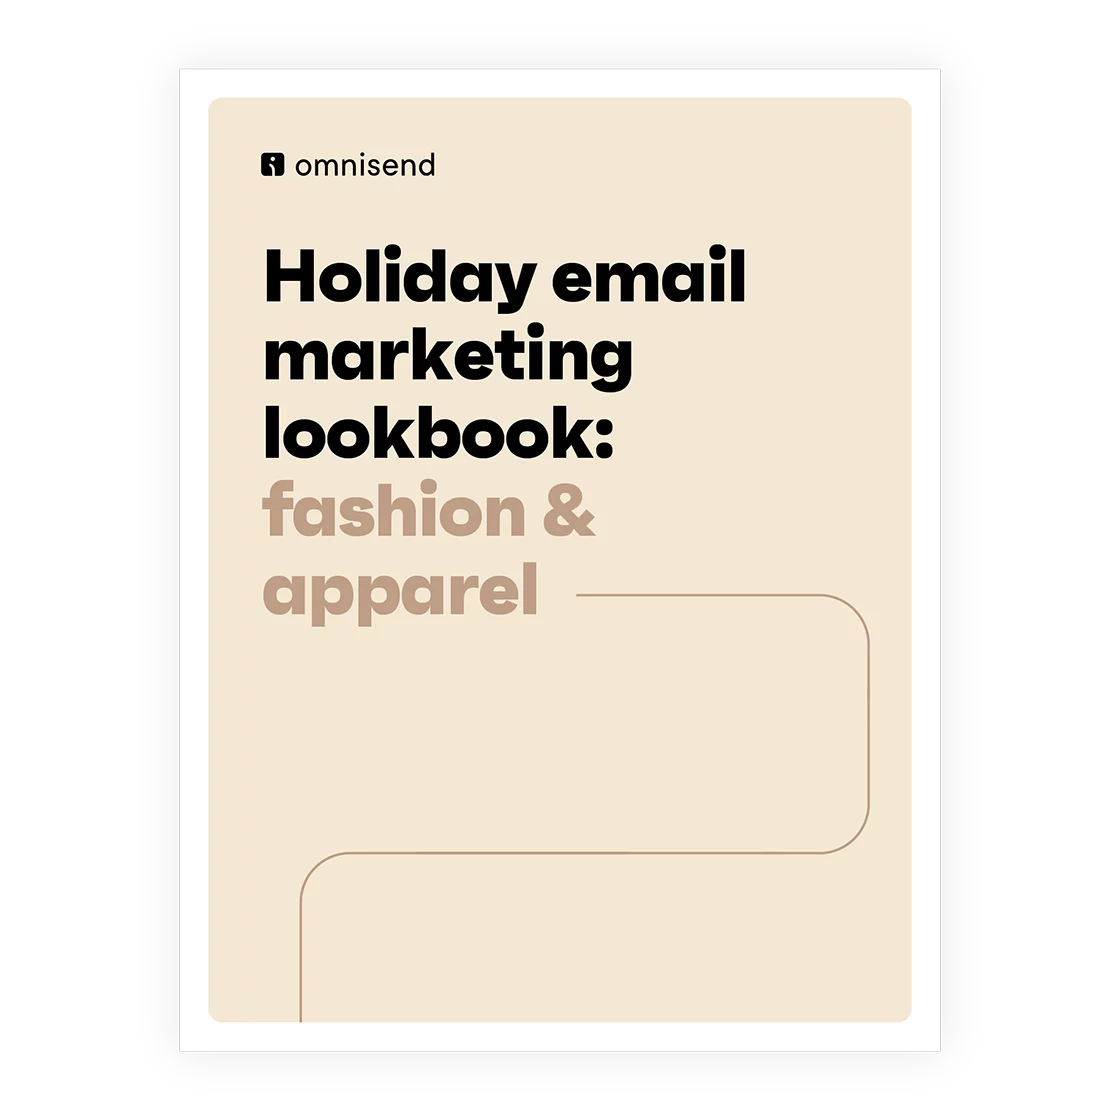 Holiday email marketing lookbook: Fashion & apparel